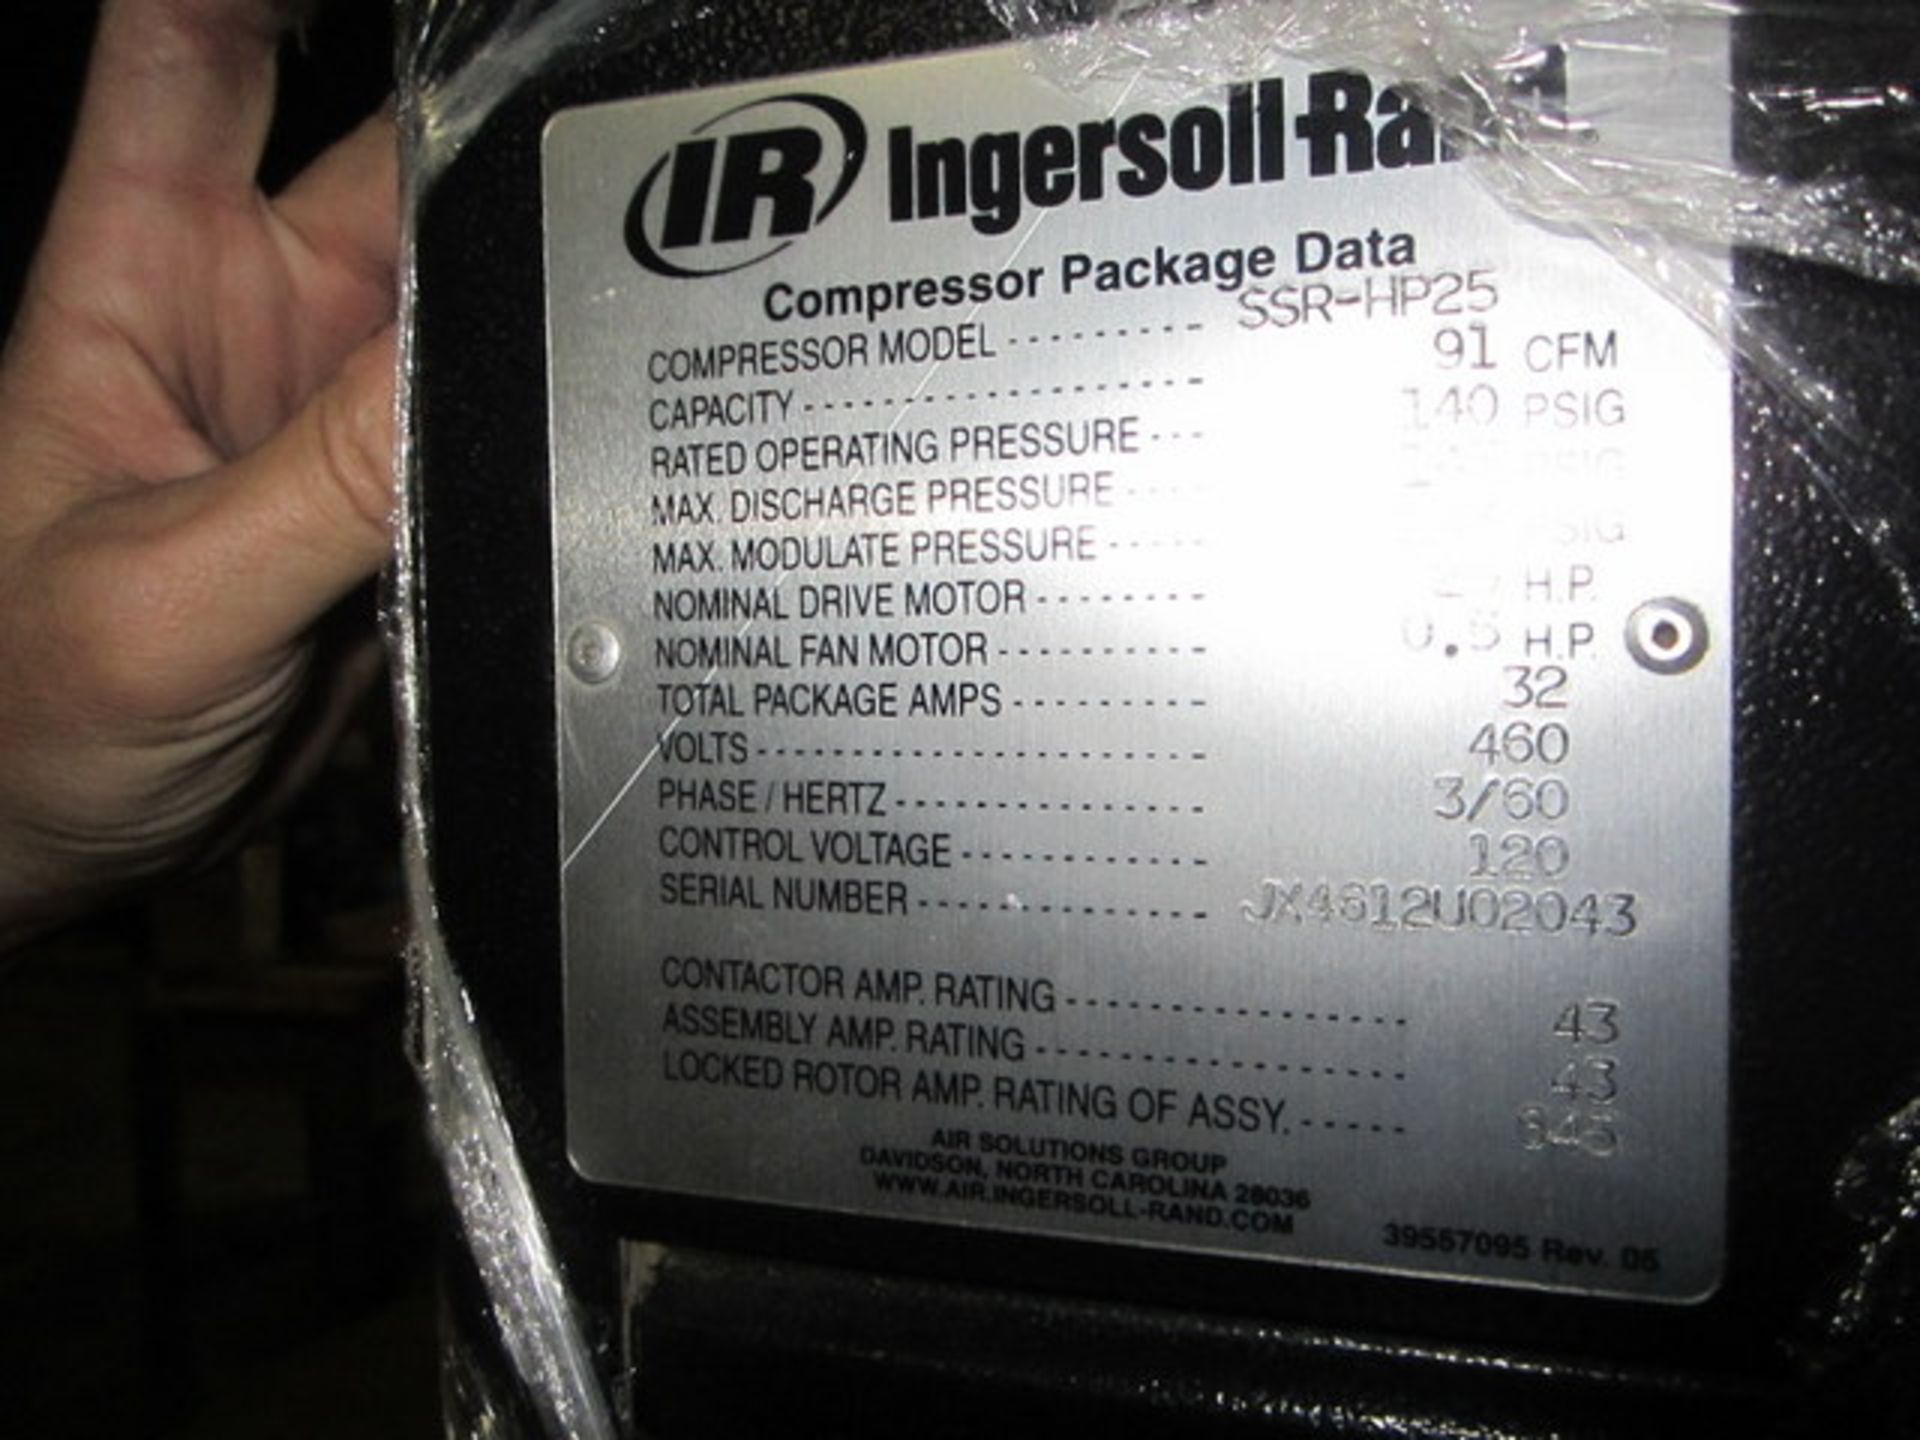 Ingersoll-Rand Compressor, Model #SRR-HP25, SN JX4612U02043 - Image 2 of 3